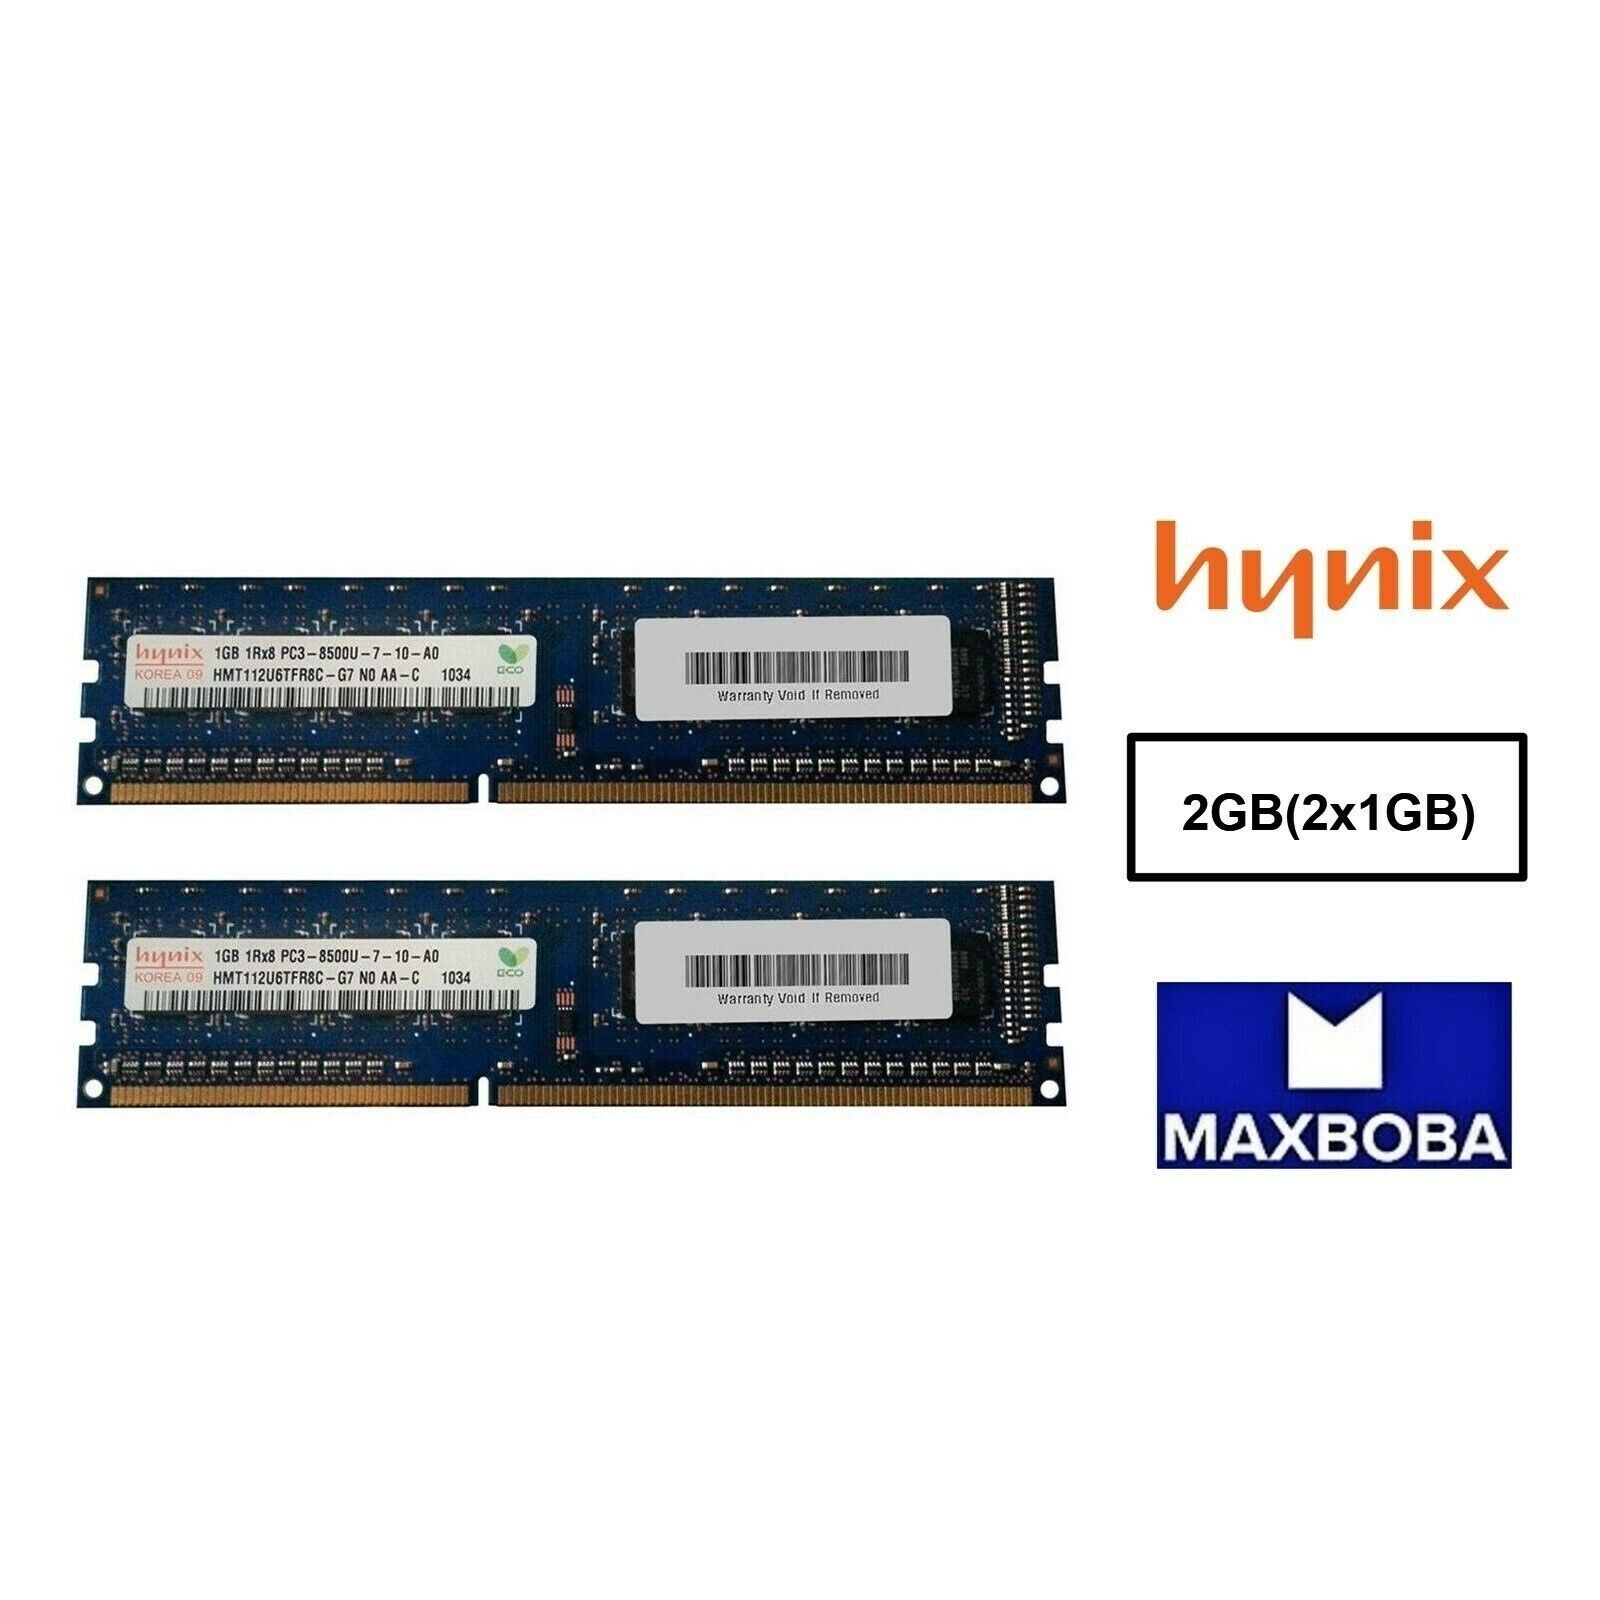 Hynix Memory 2GB (2x 1GB) 8500U Desktop PC RAM DDR3 1RX8 HMT112U6TFR8C-G7